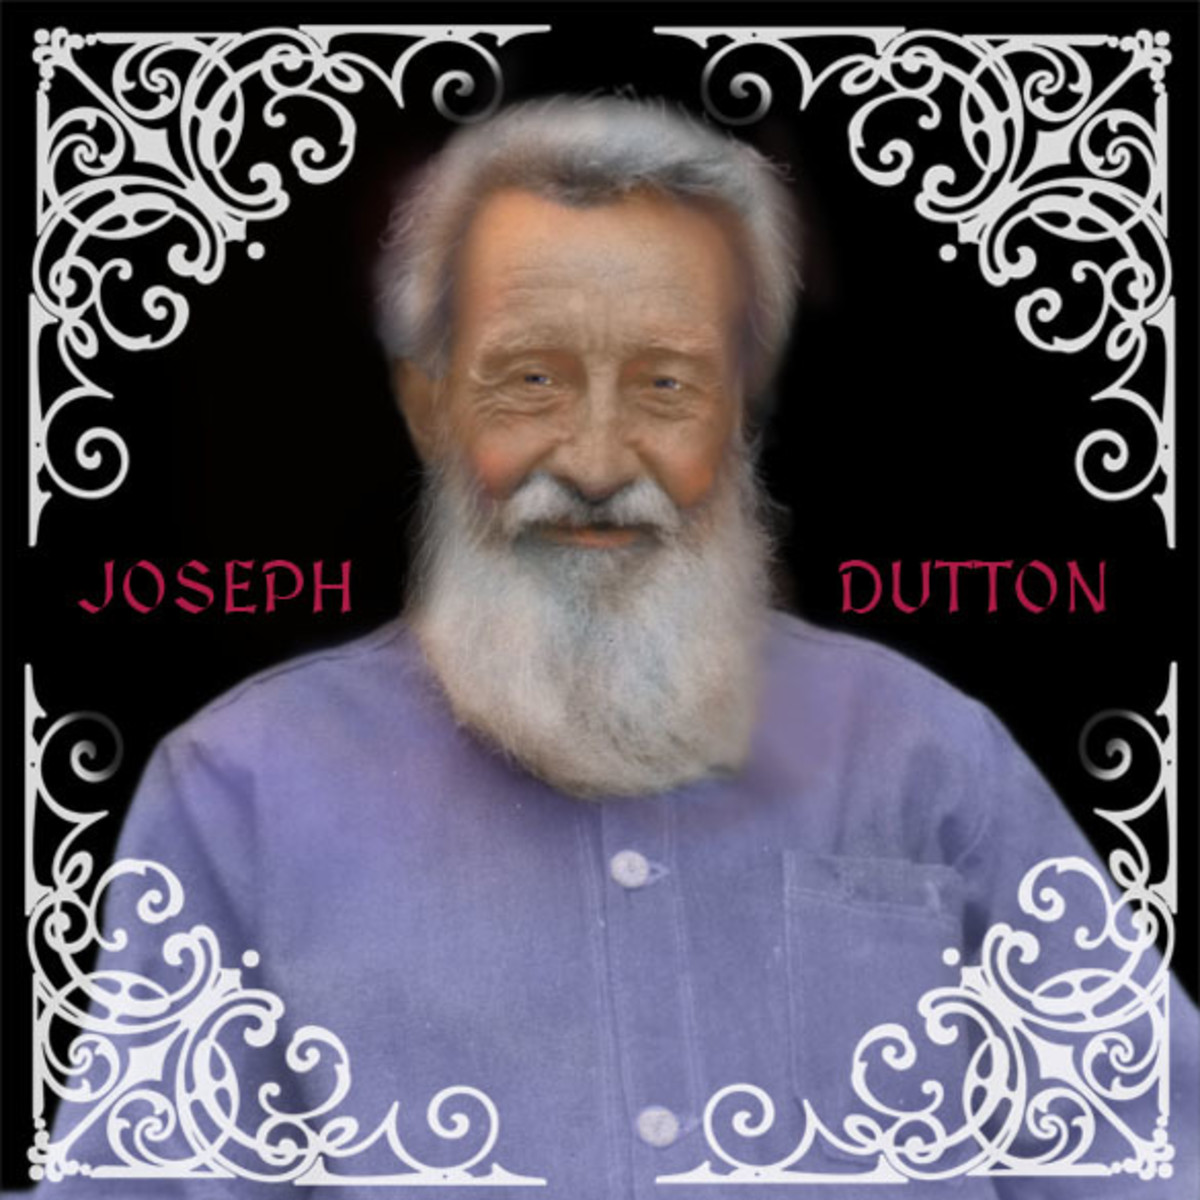 Joseph Dutton: A New American Saint?